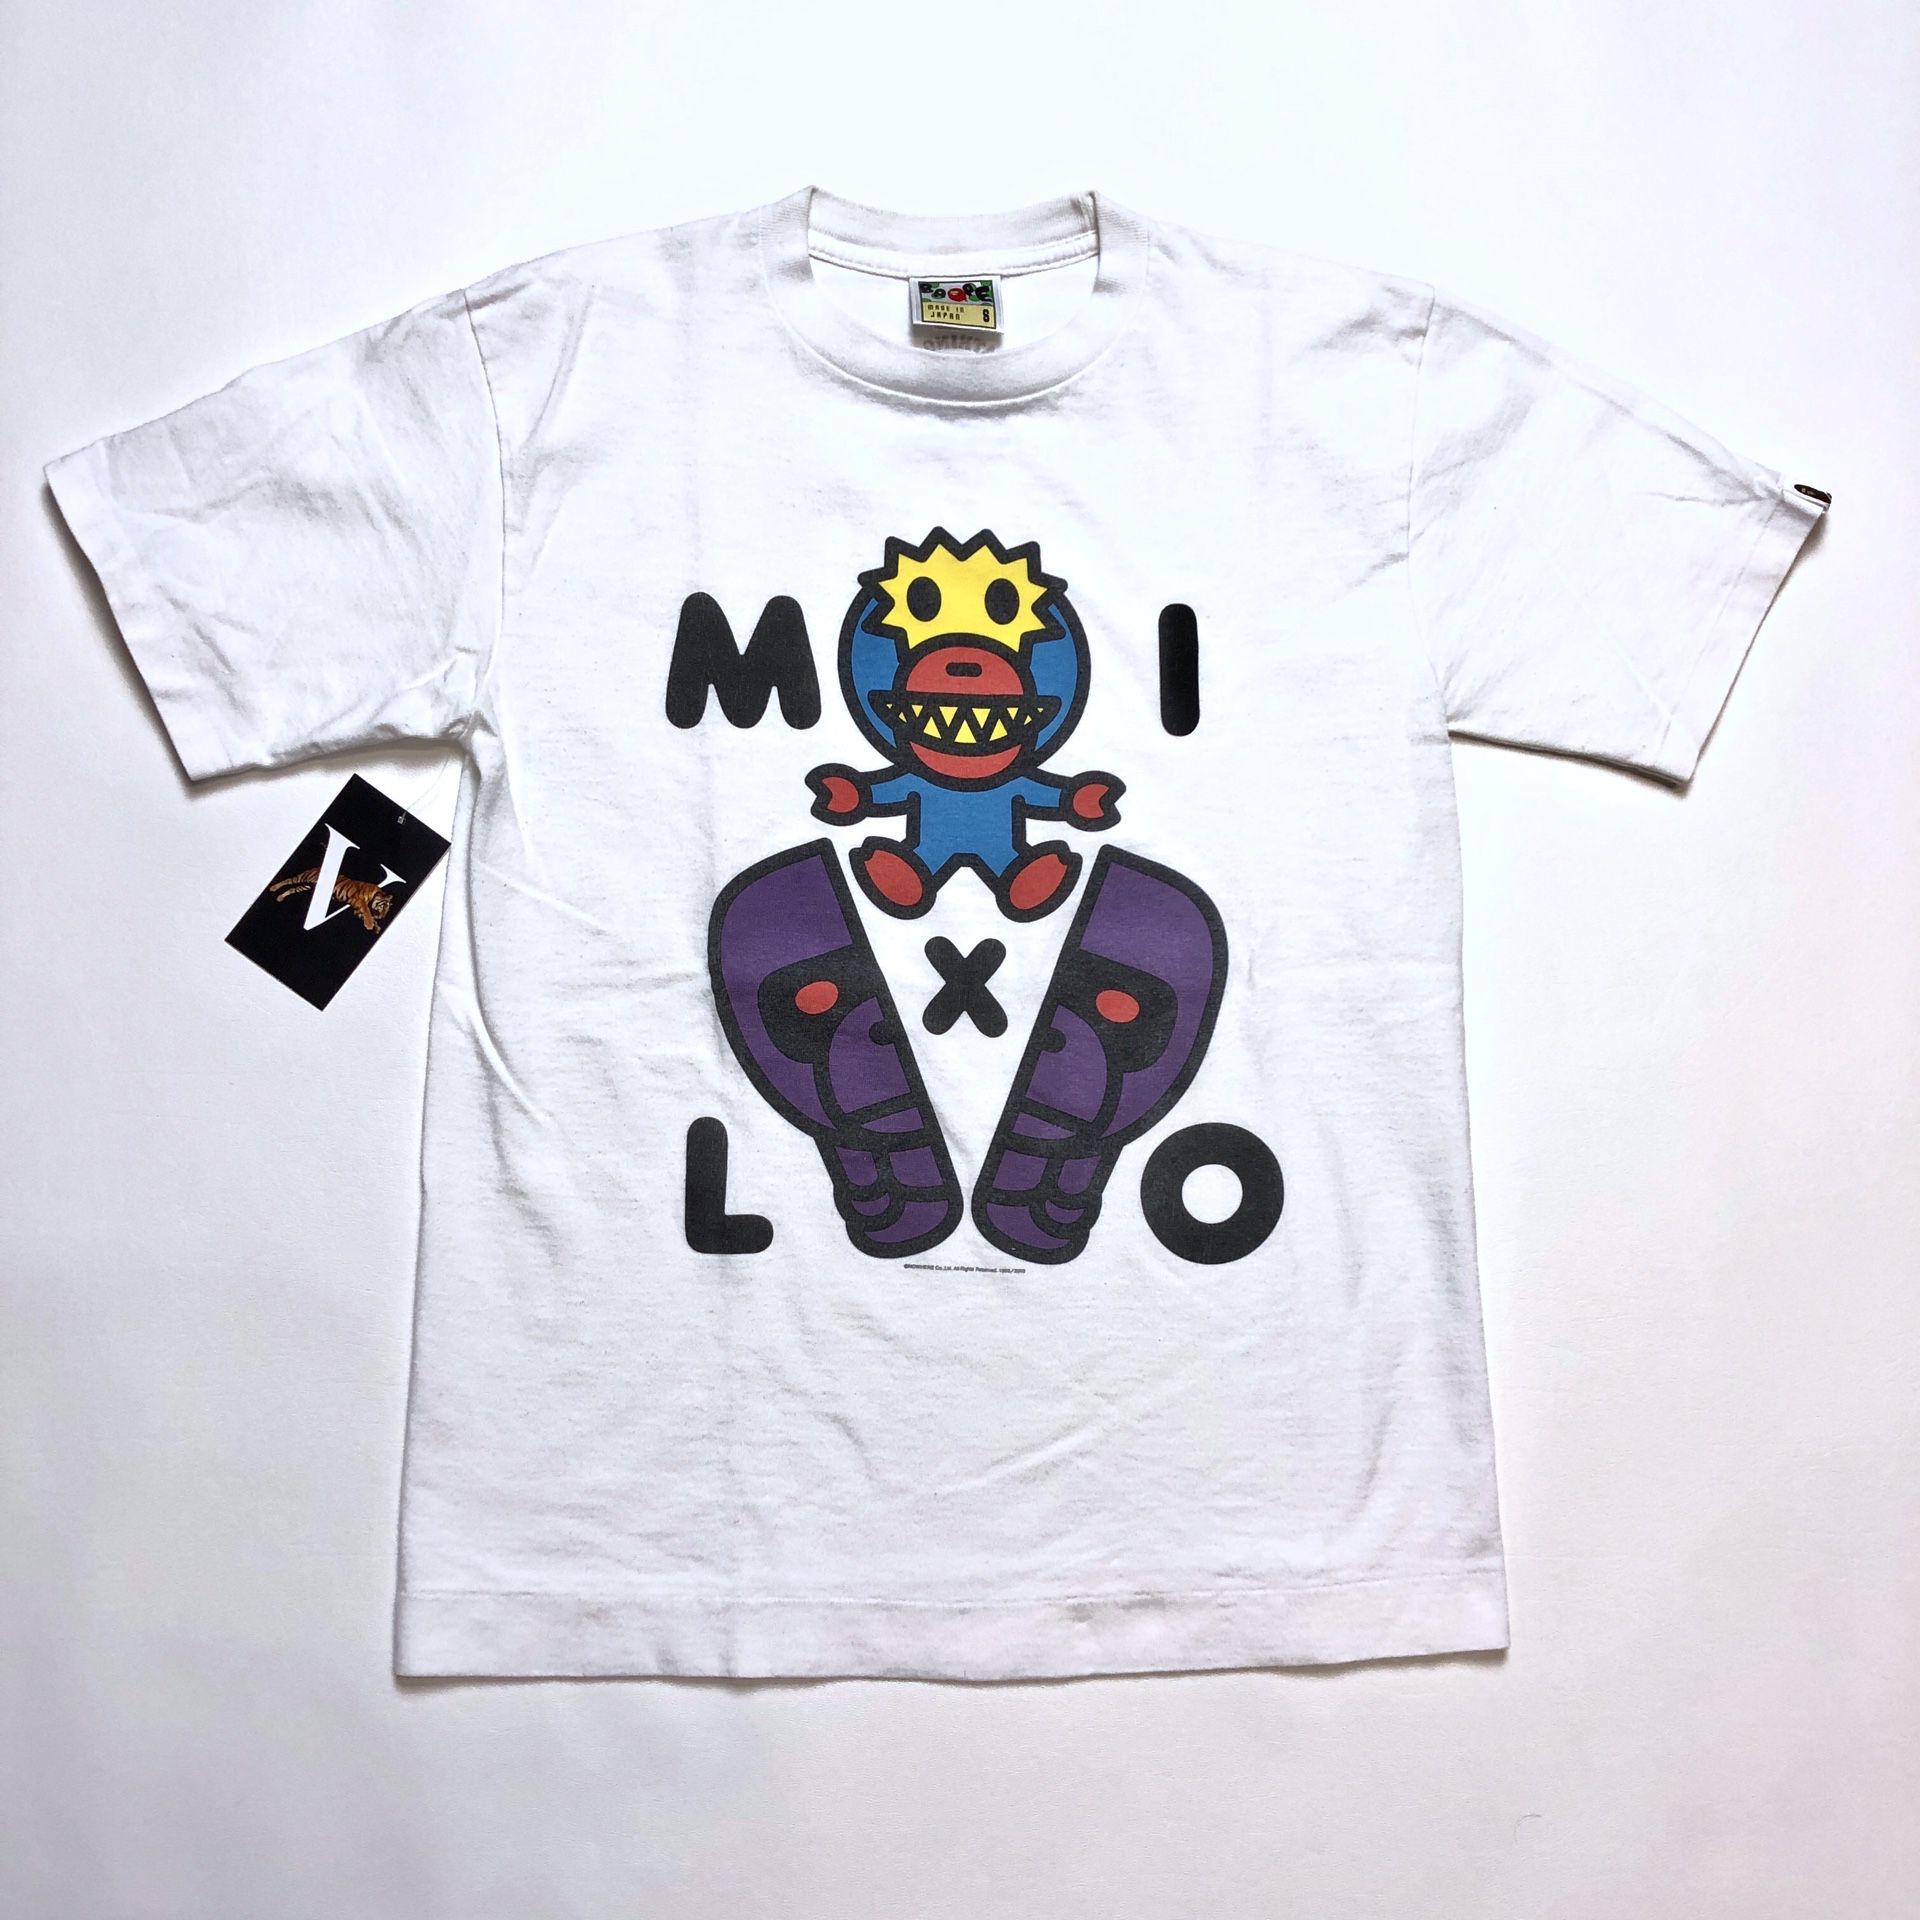 2009 A Bathing Ape Bape Baby Milo Monster Shirt Japan Tee Size Small S